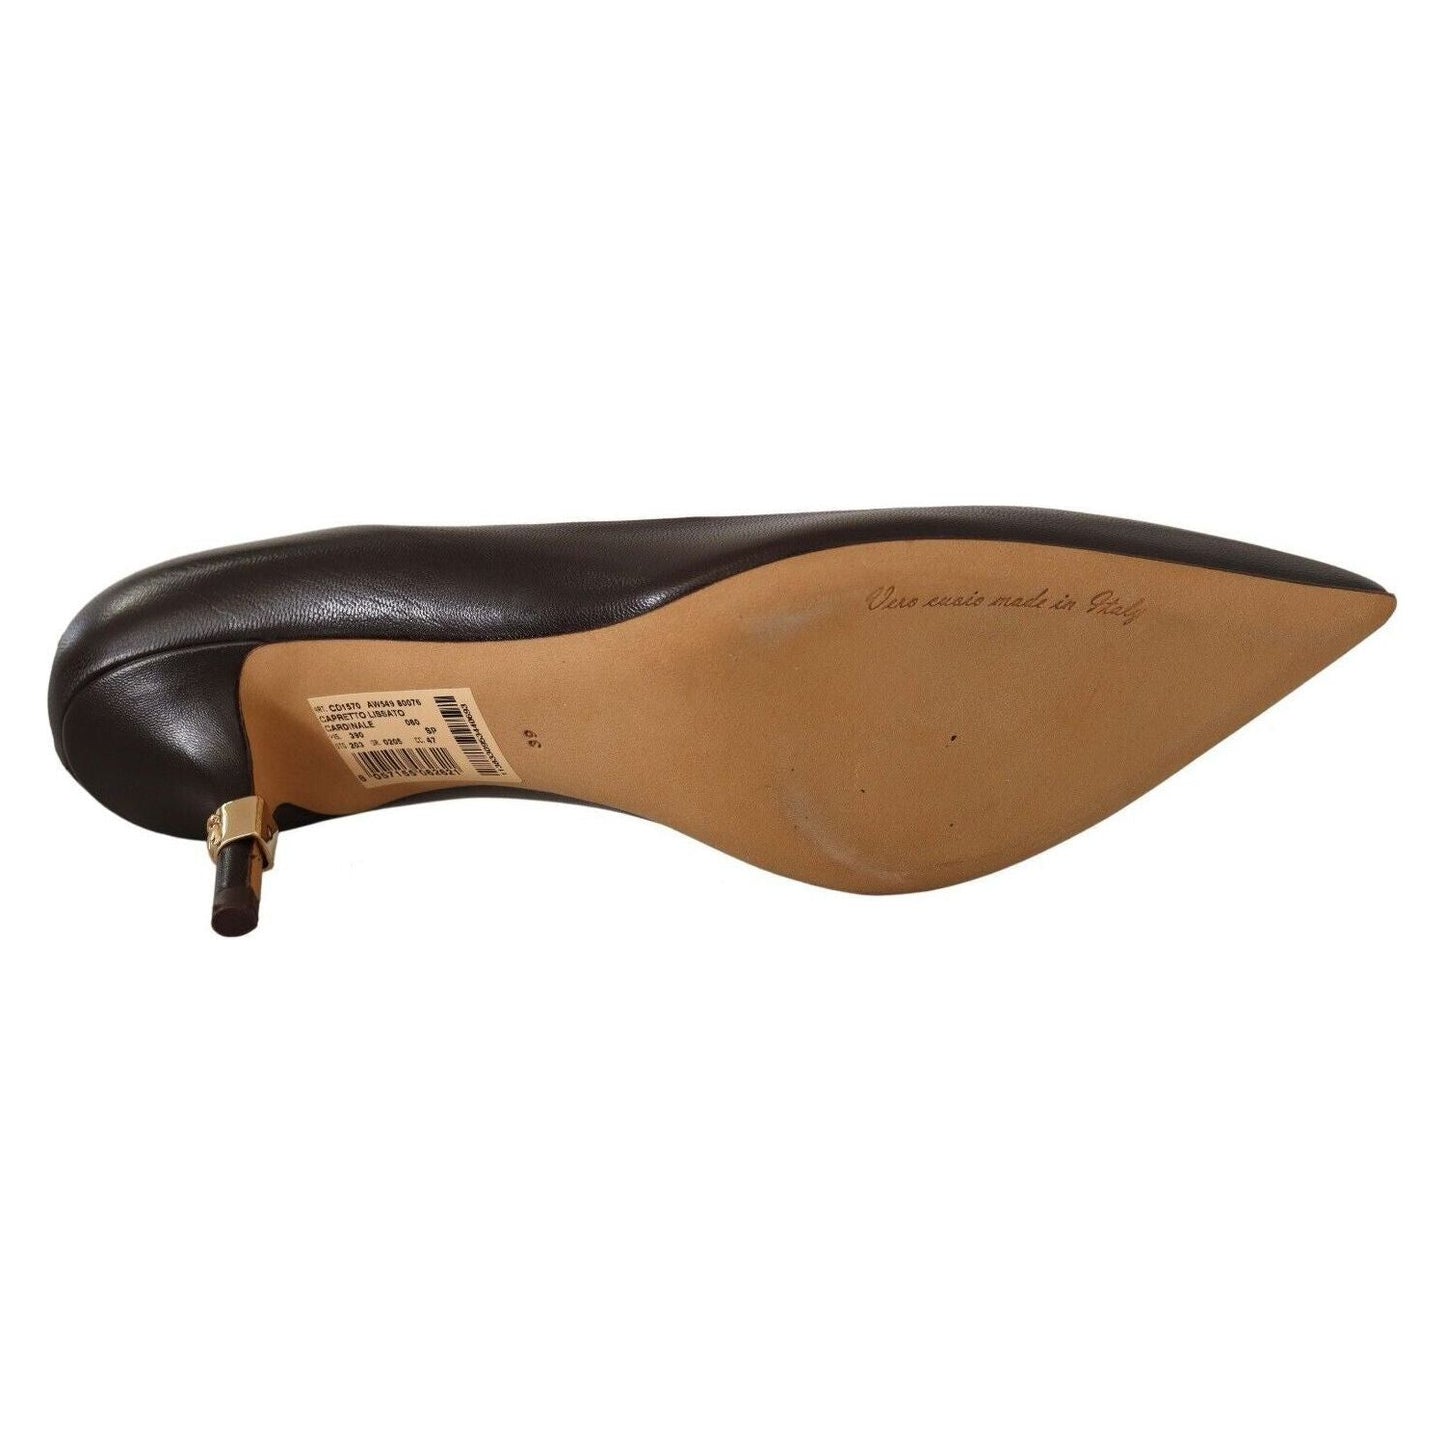 Dolce & Gabbana Elegant Brown Leather Heels Pumps brown-leather-kitten-mid-heels-pumps-shoes